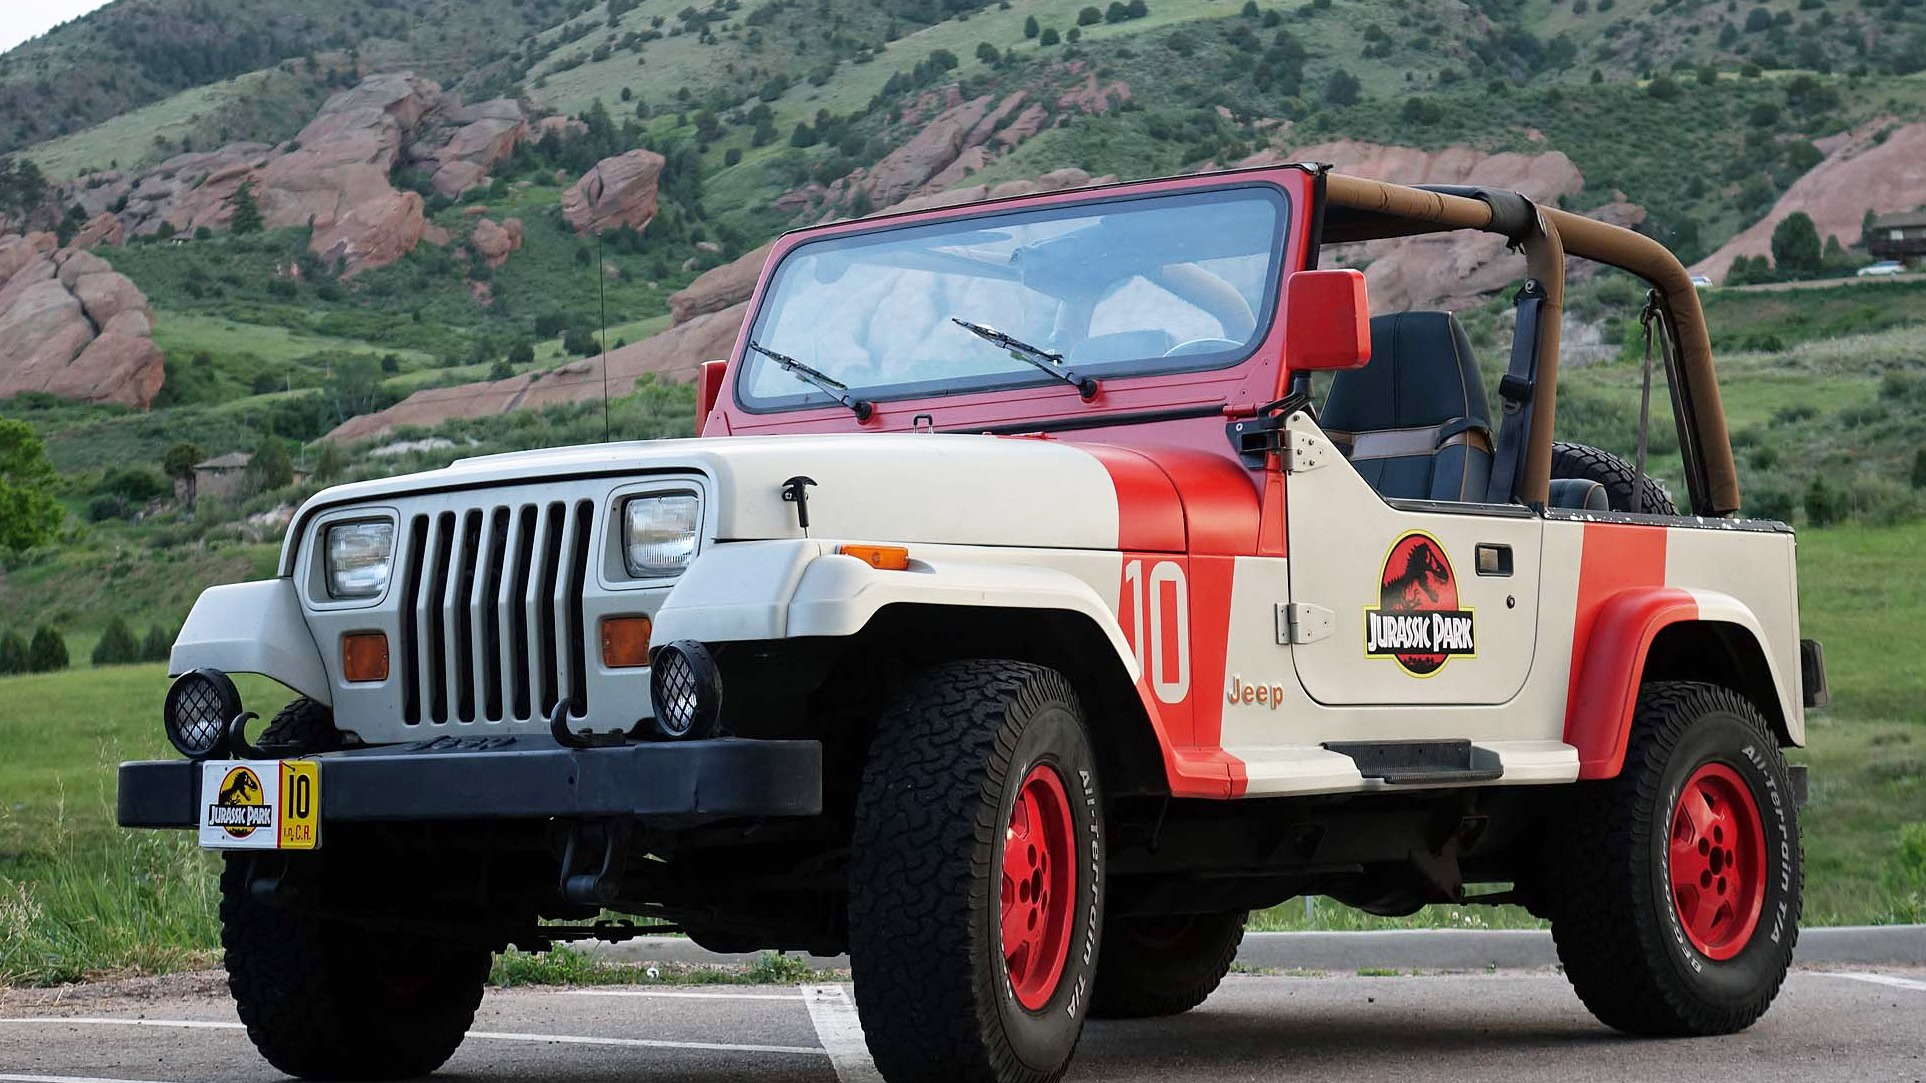 jurassic-park-jeep-wranglers-at-dinosaur-ridge-morrison-colorado_100705623.jpg